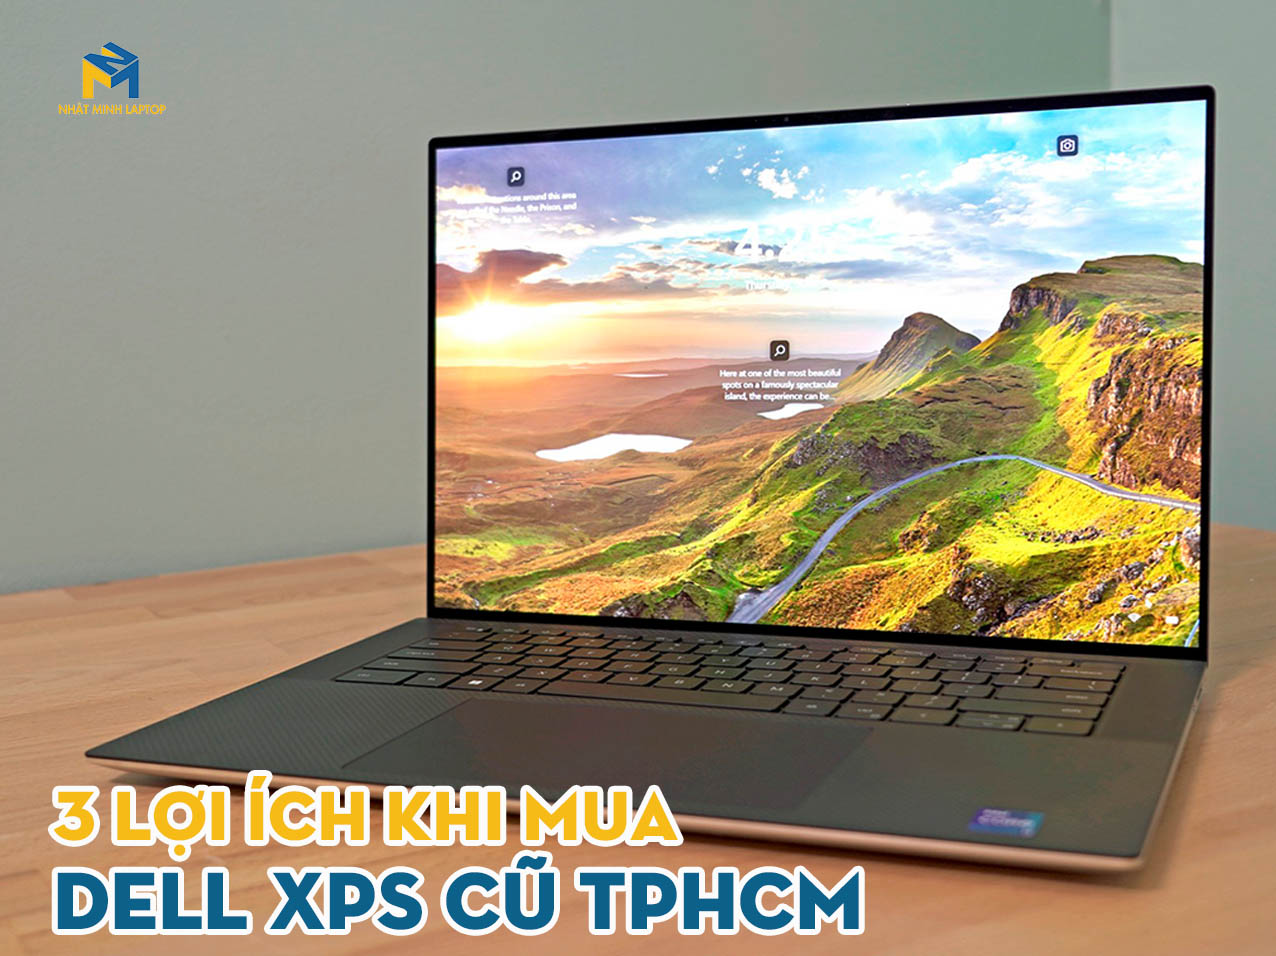 3 Lợi ích khi mua Laptop Dell XPS cũ TPHCM tại Nhật Minh Laptop